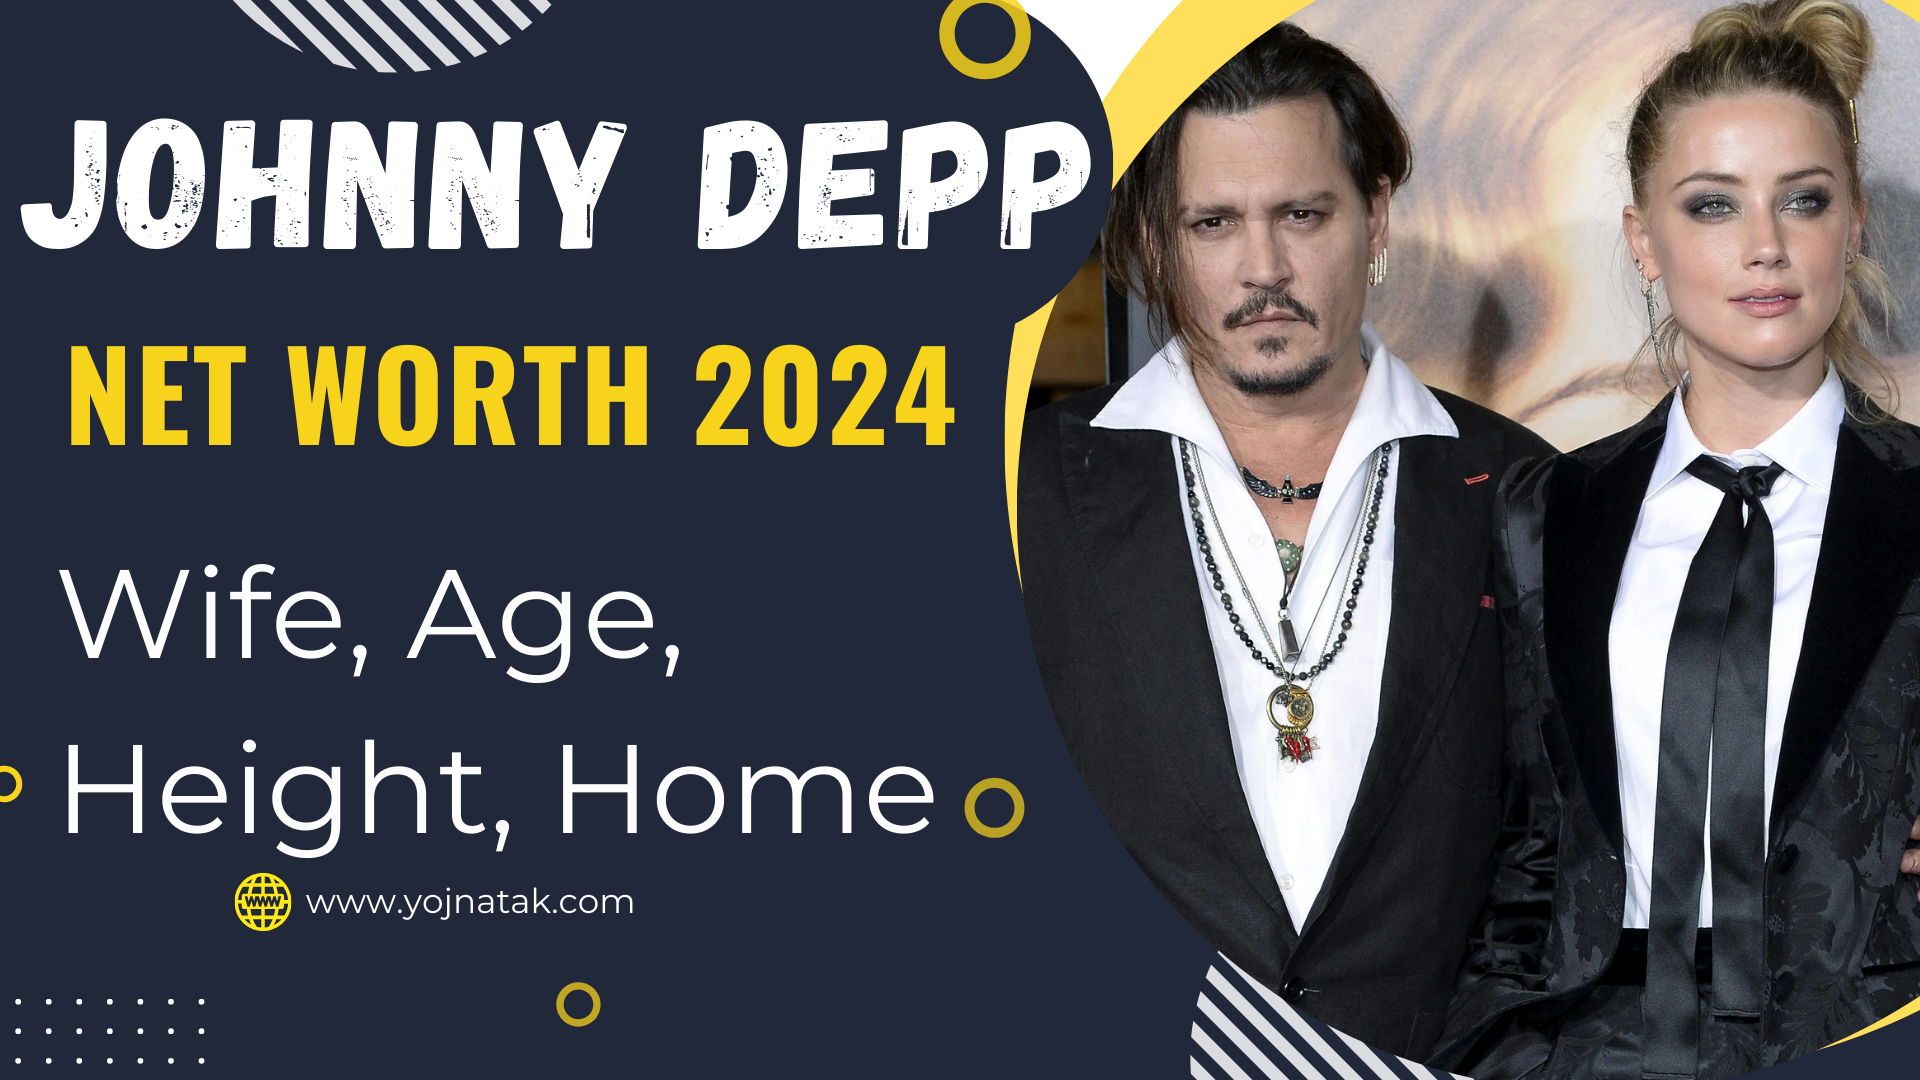 Johnny Depp Net Worth 2024